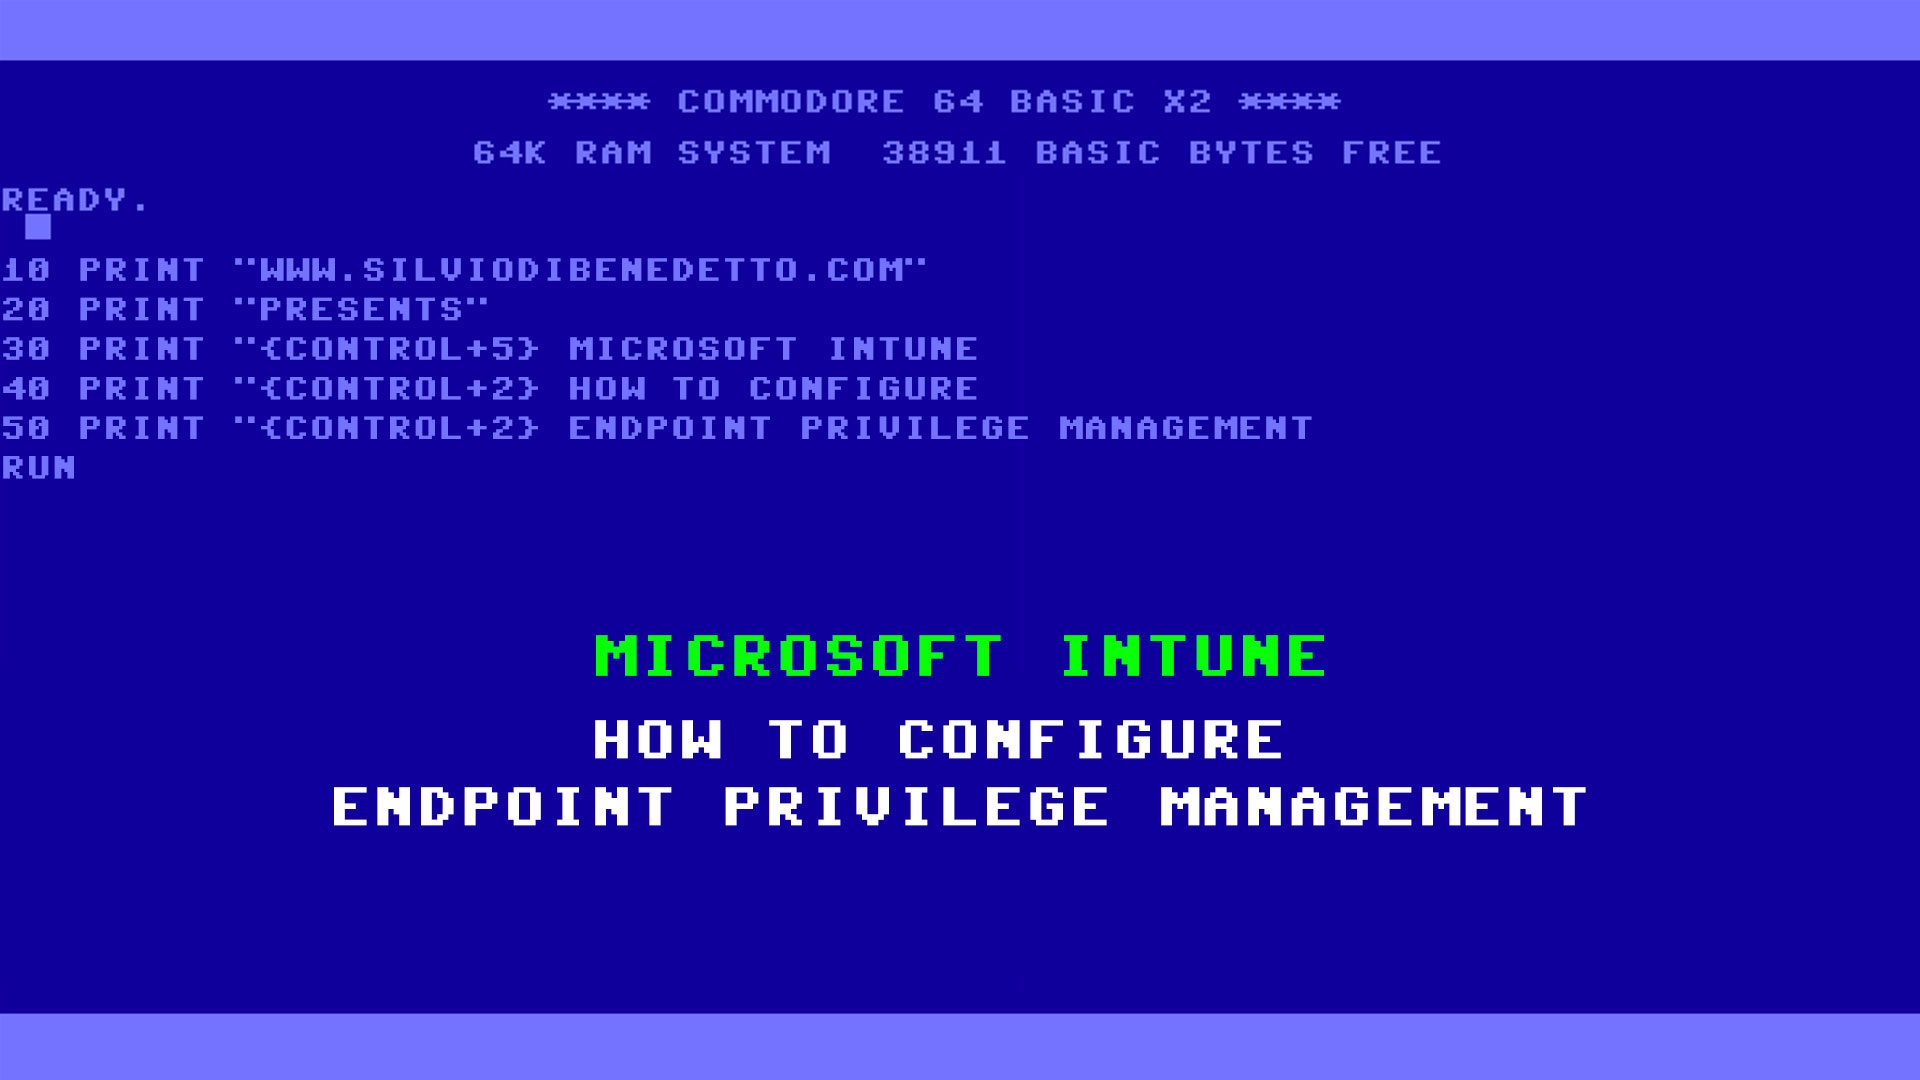 Endpoint Privilege Management Microsoft Intune